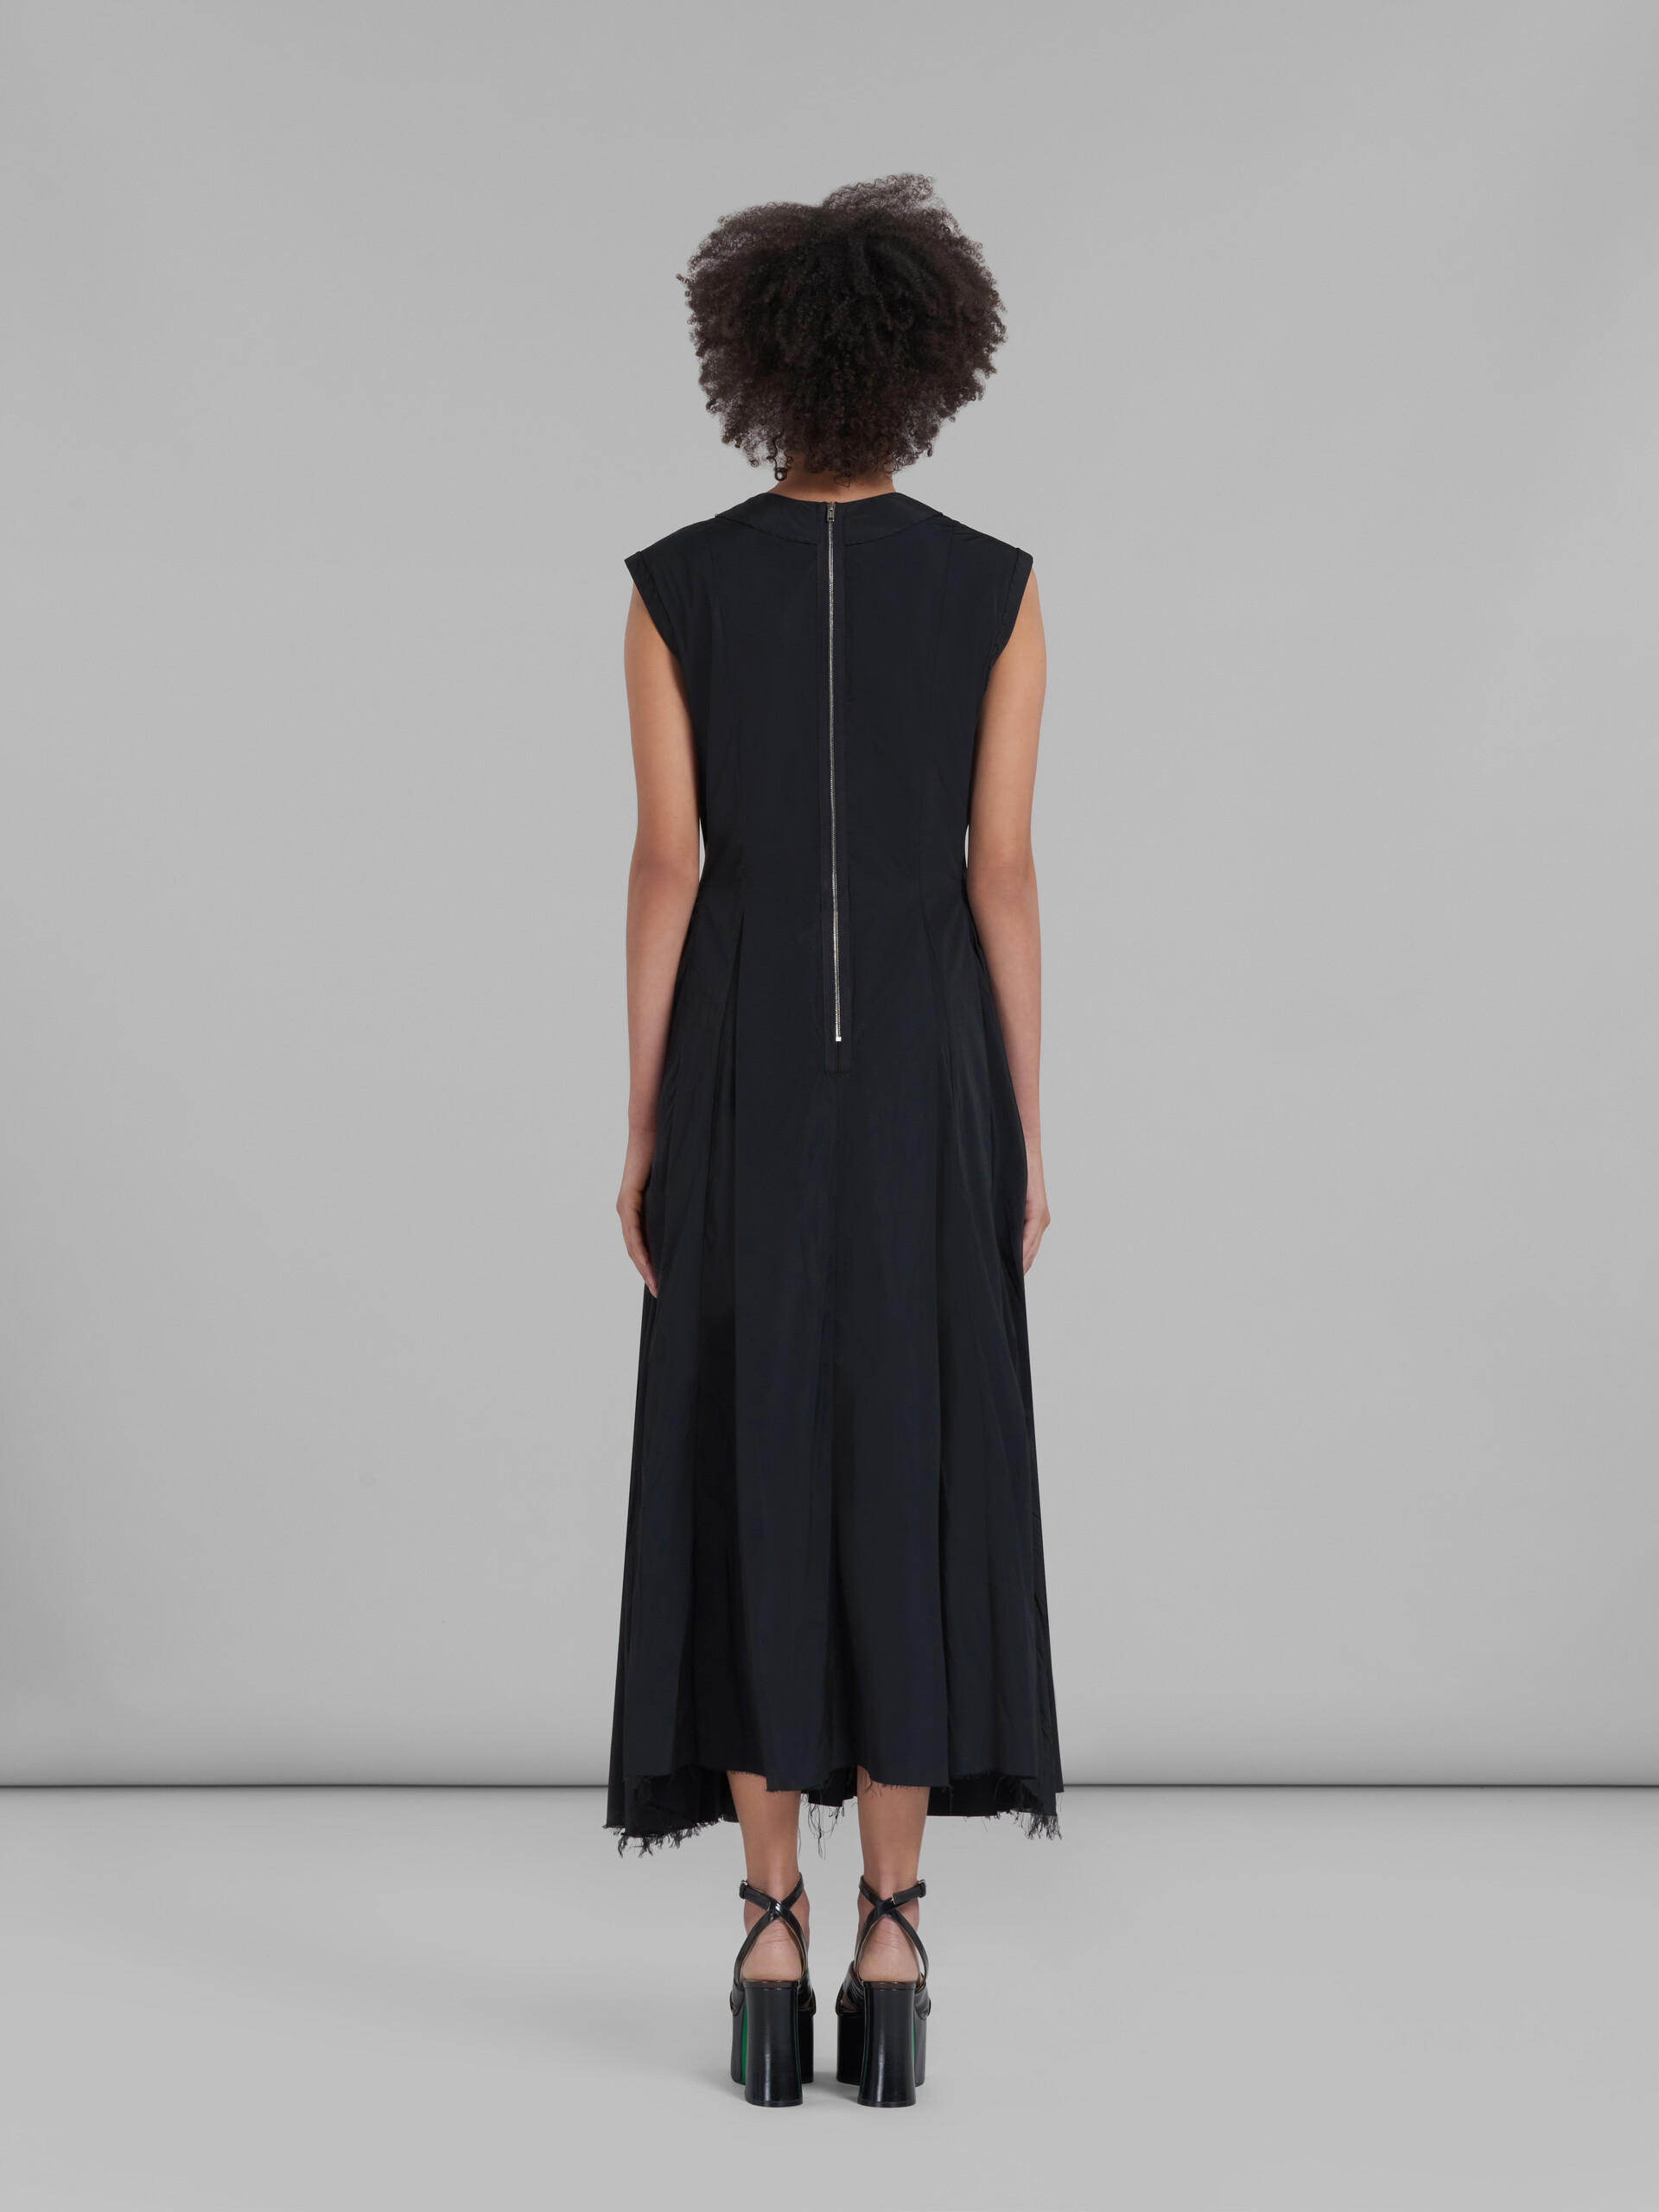 Black taffeta dress with apron front - Dresses - Image 3